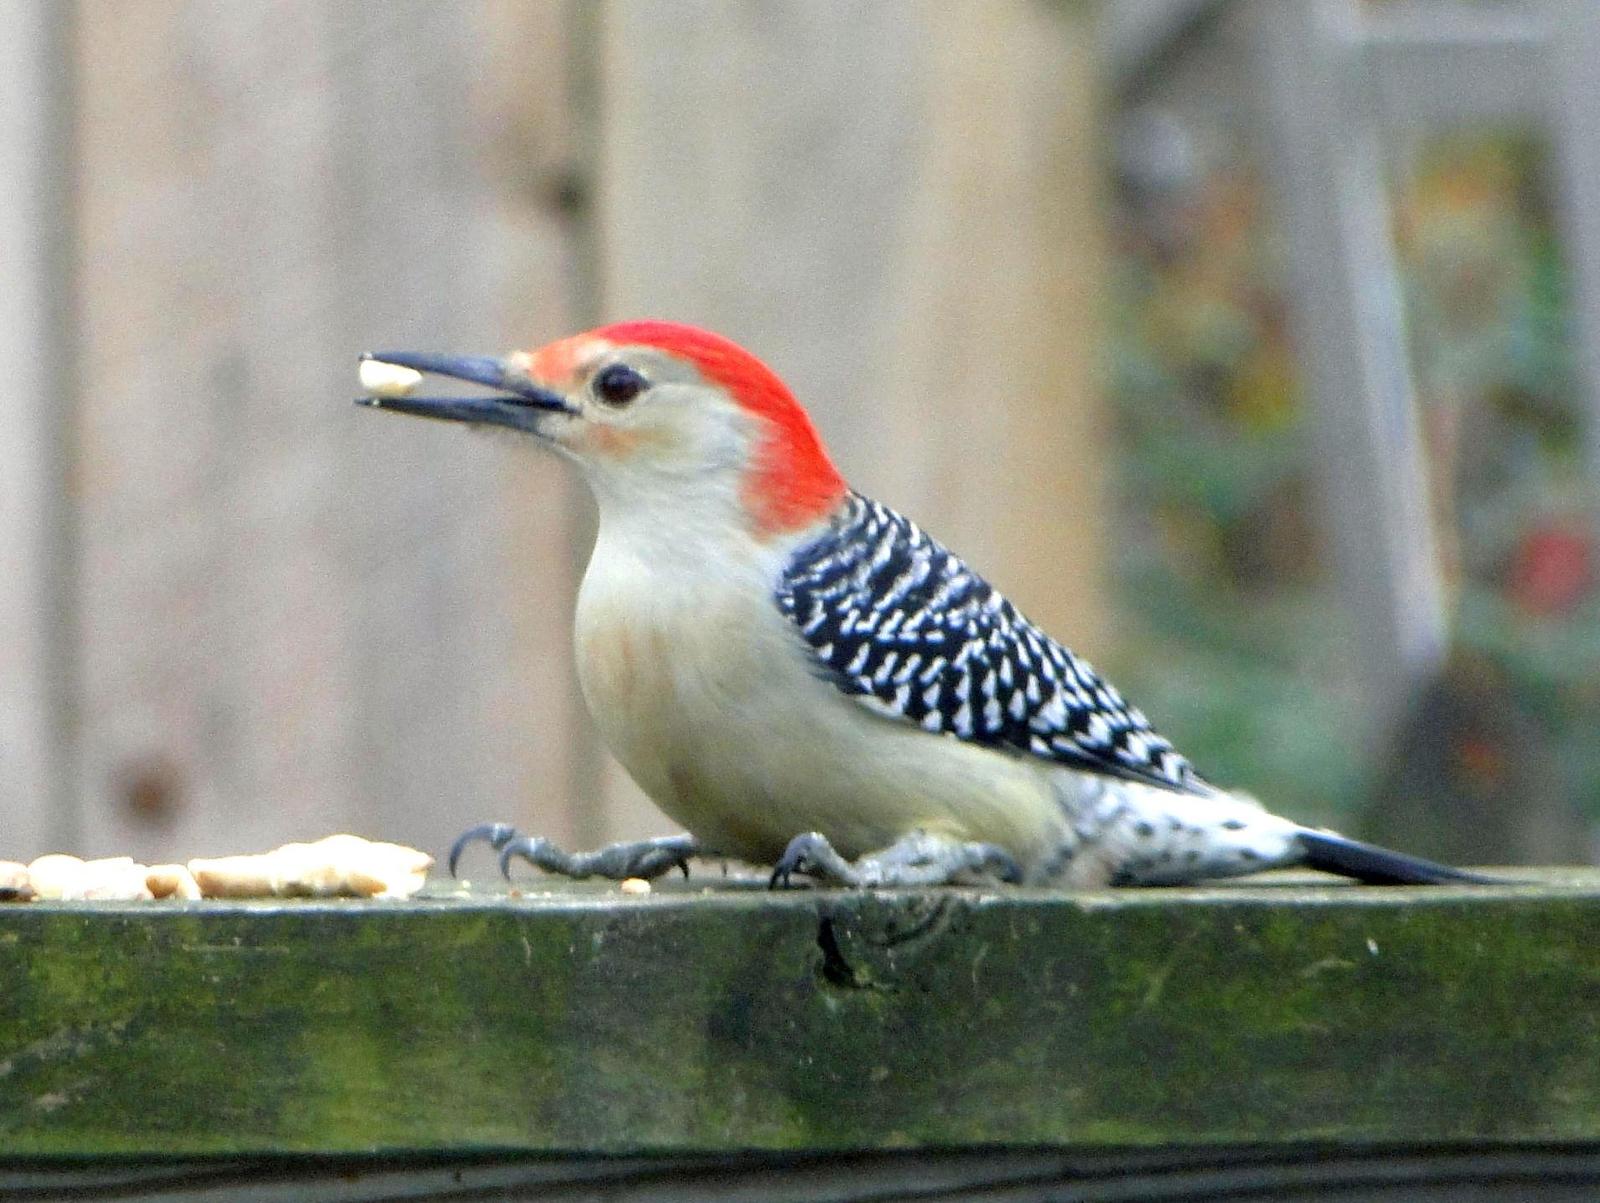 Red-bellied Woodpecker Photo by Phil Sheridan